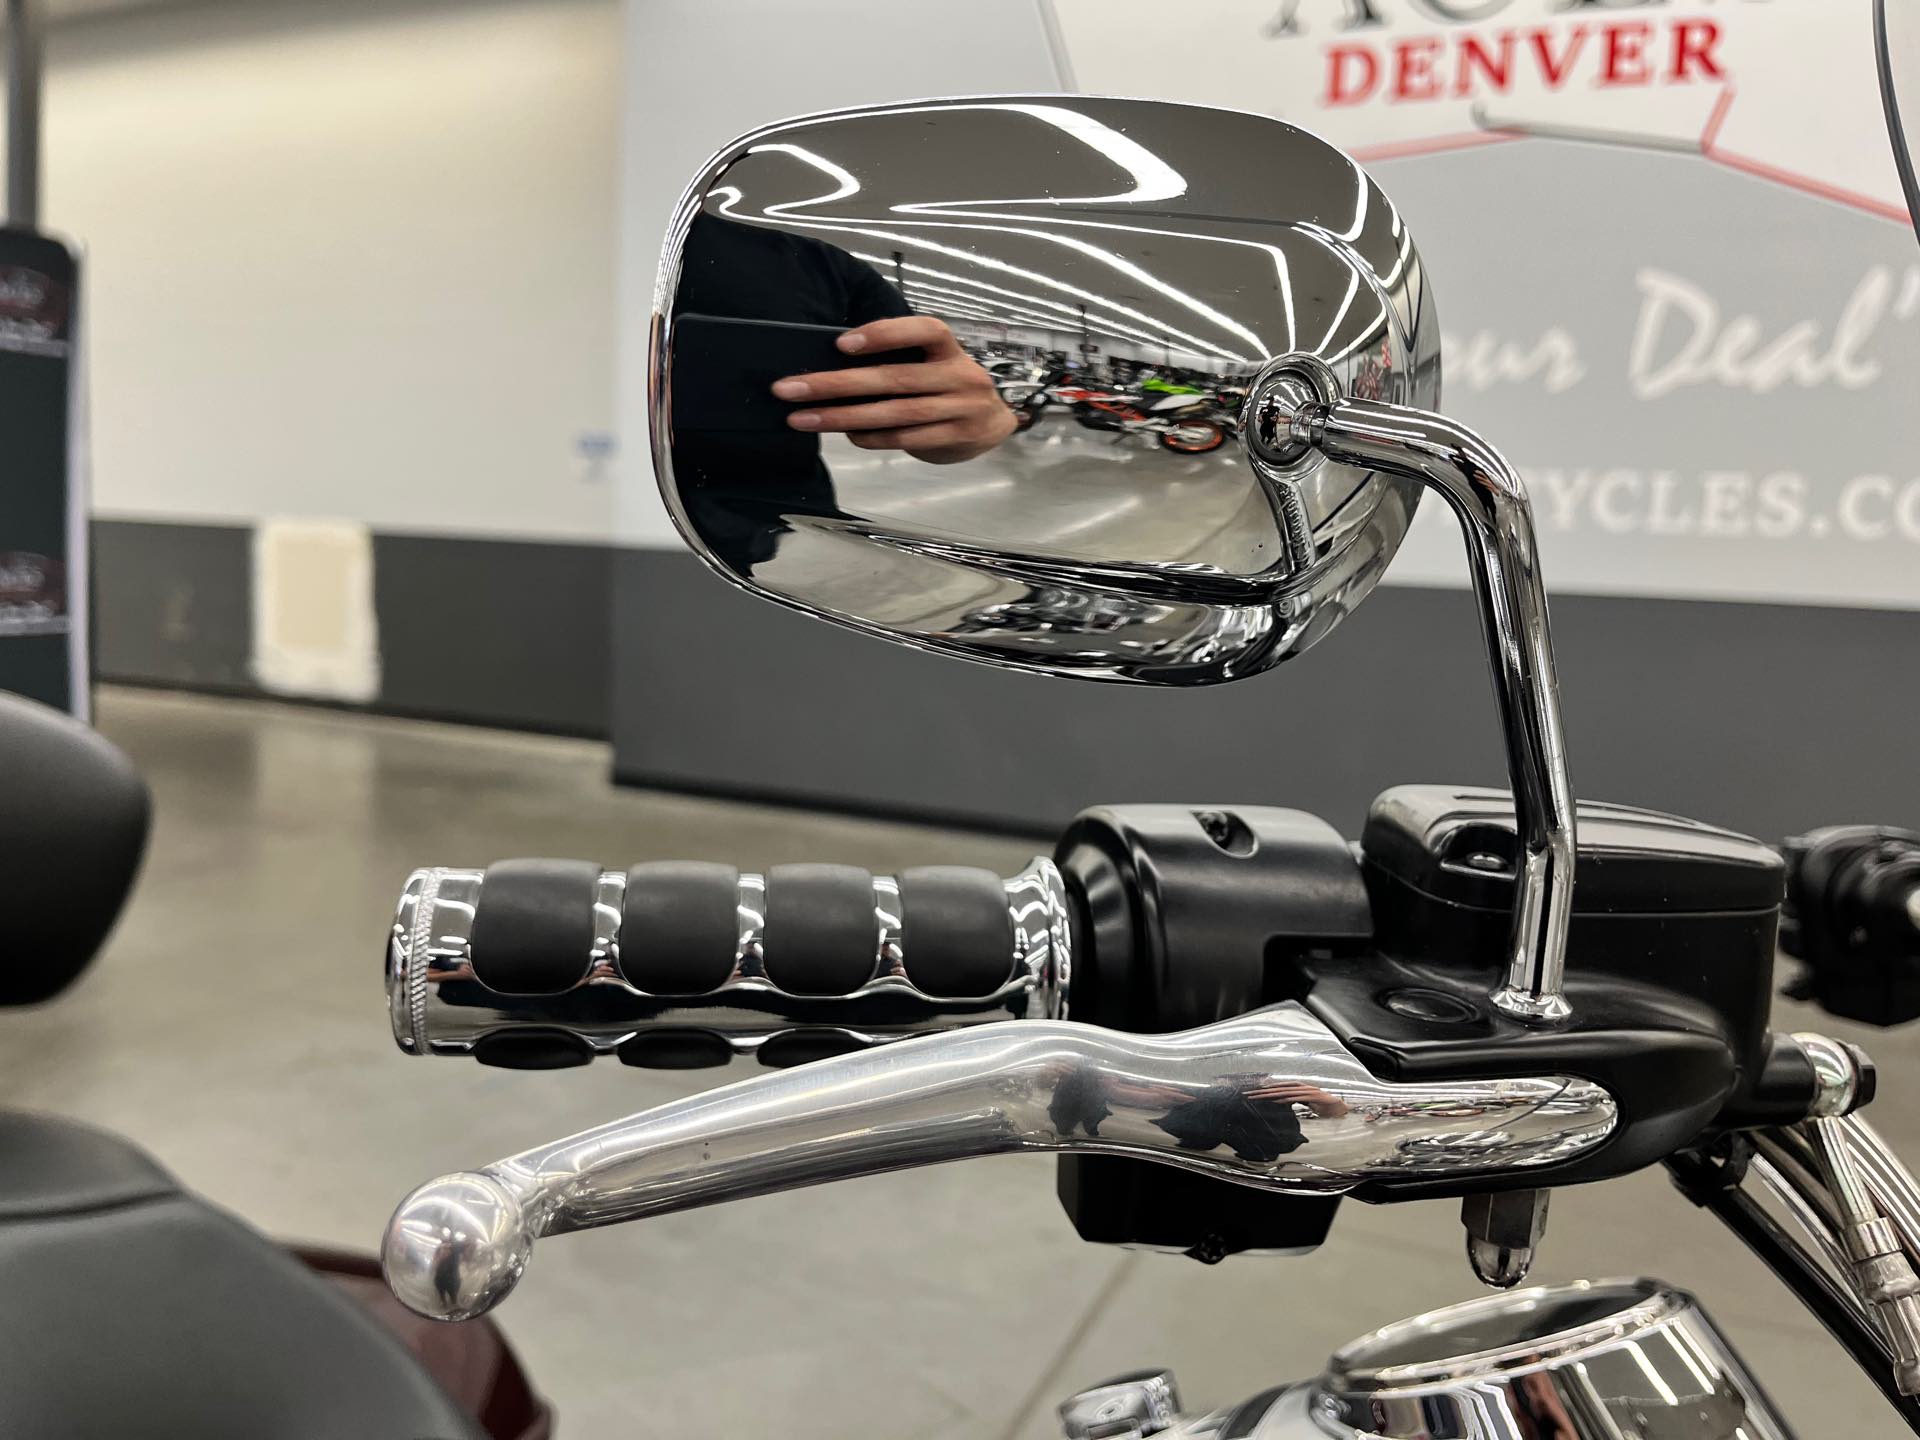 2018 Harley-Davidson Road King Base at Aces Motorcycles - Denver